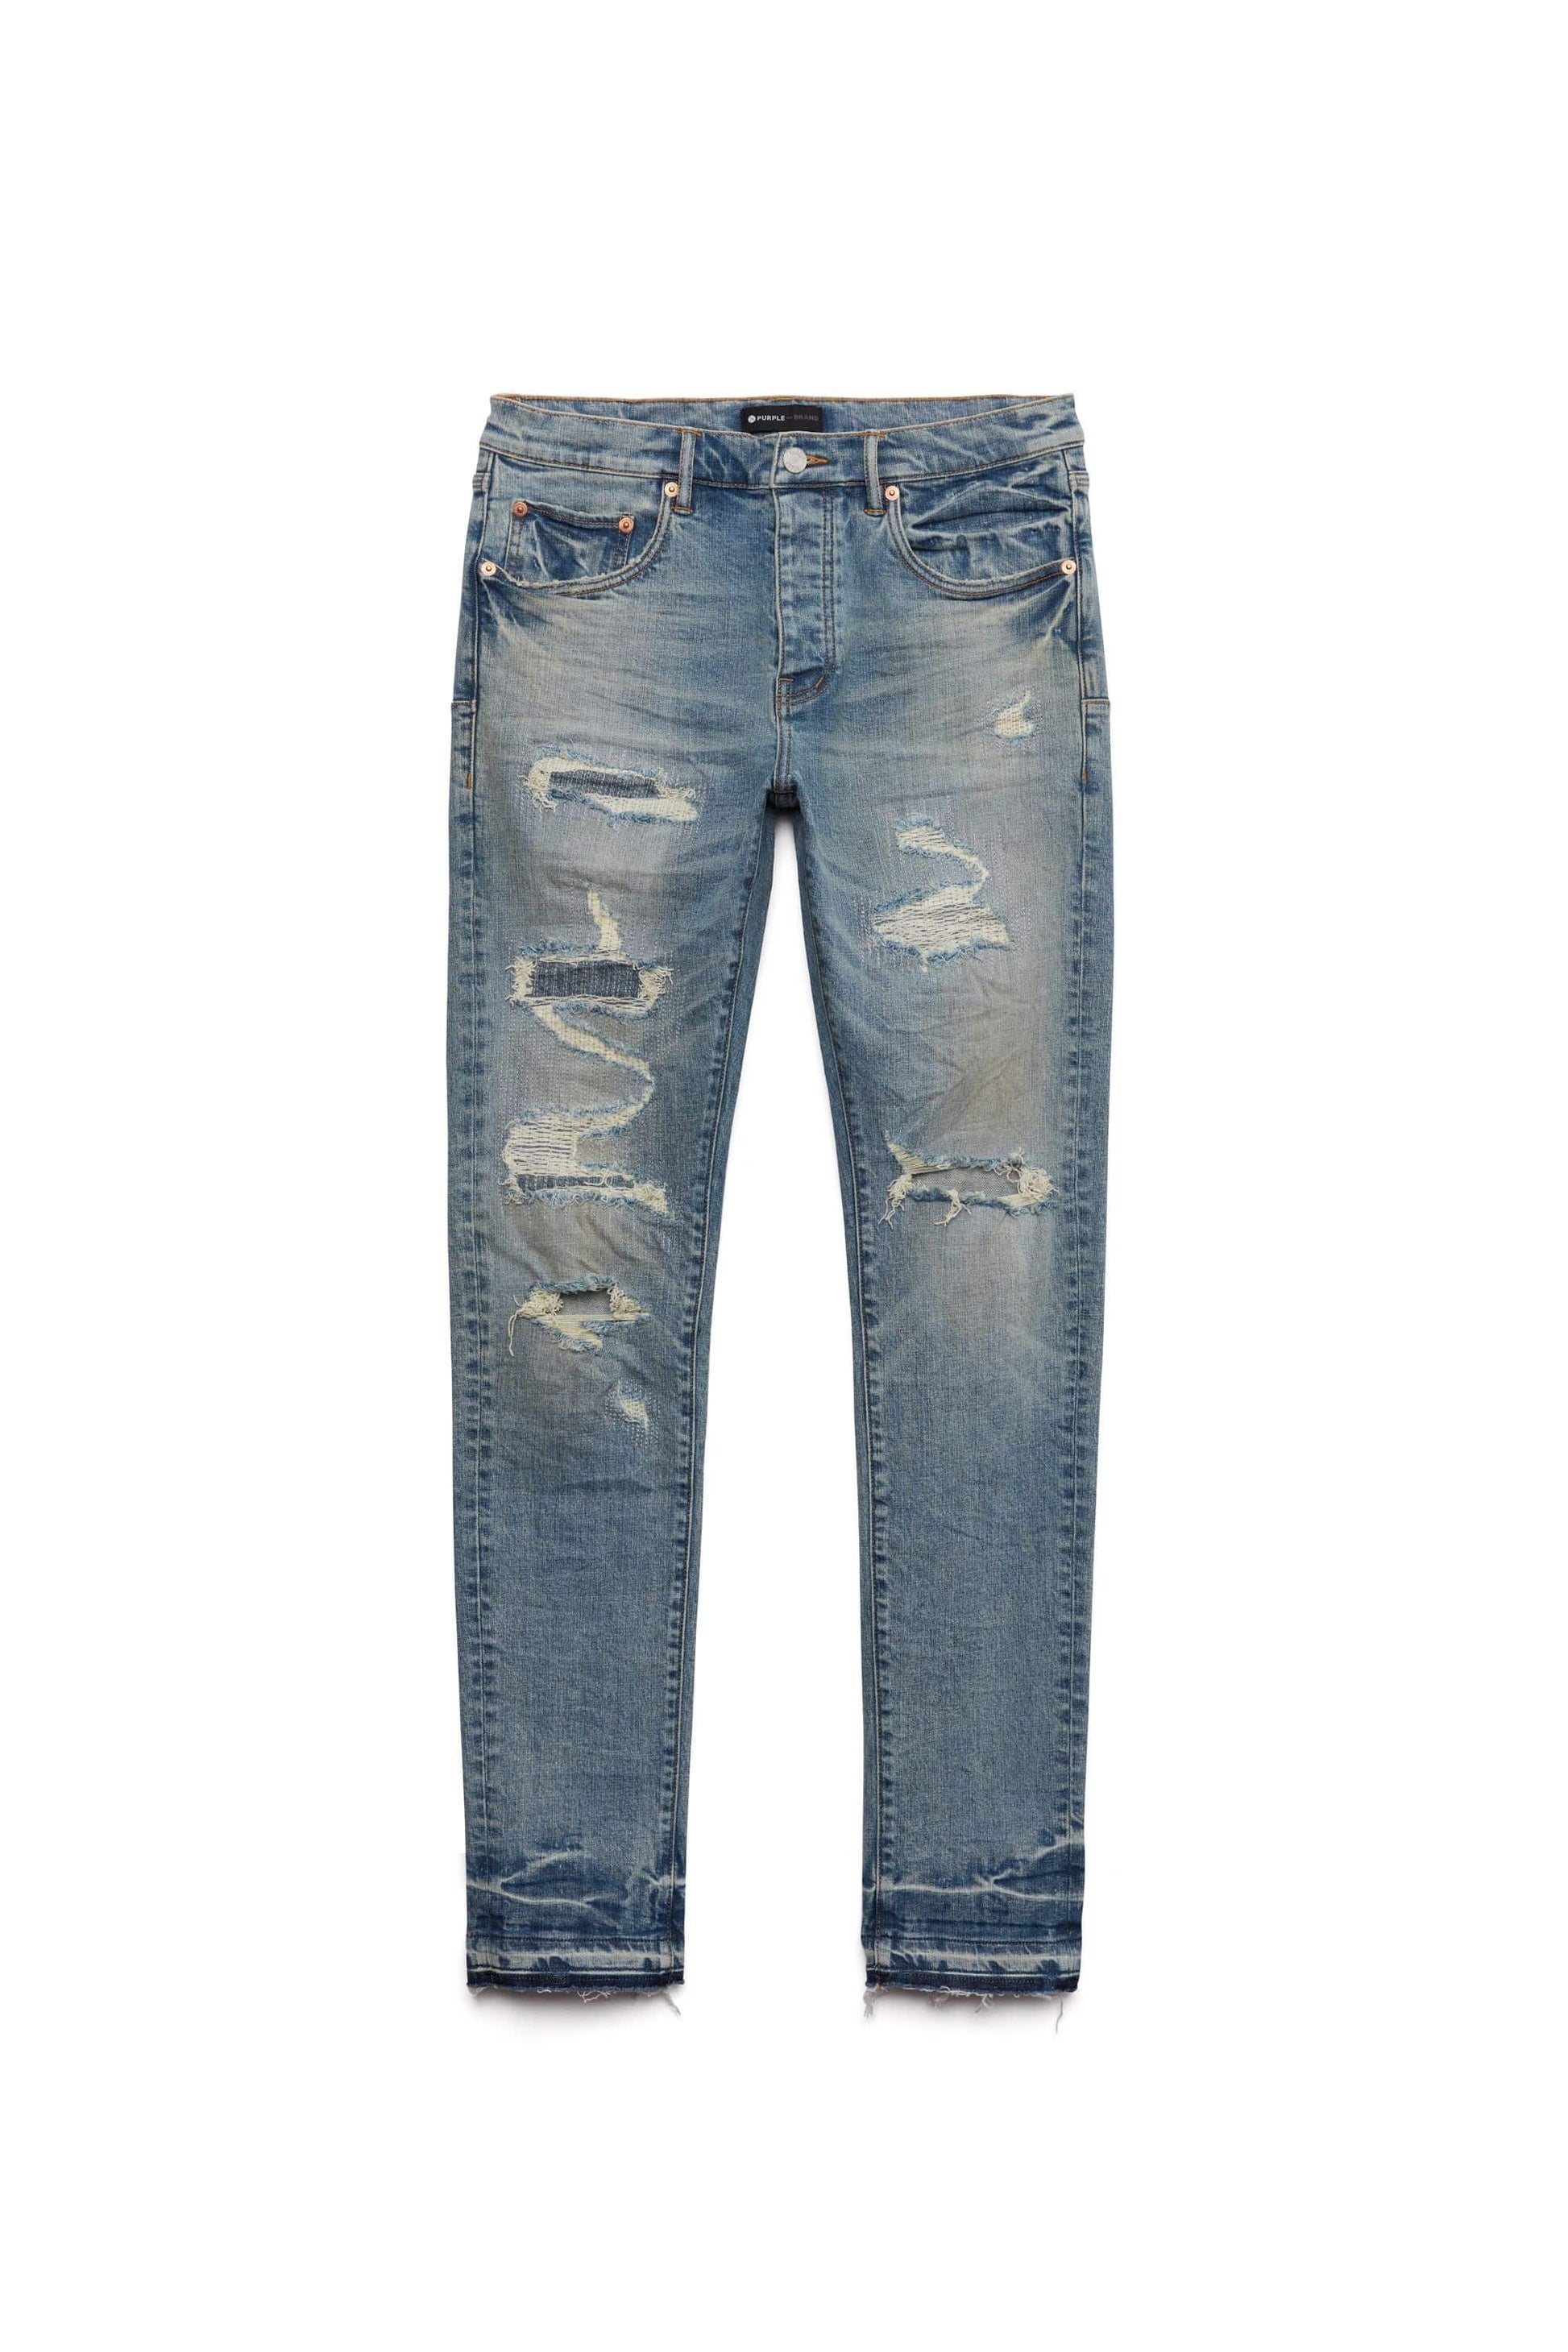 PURPLE BRAND JEANS DENIM P002- Mid Rise Slim Jean Vintage Dirty White Size  29